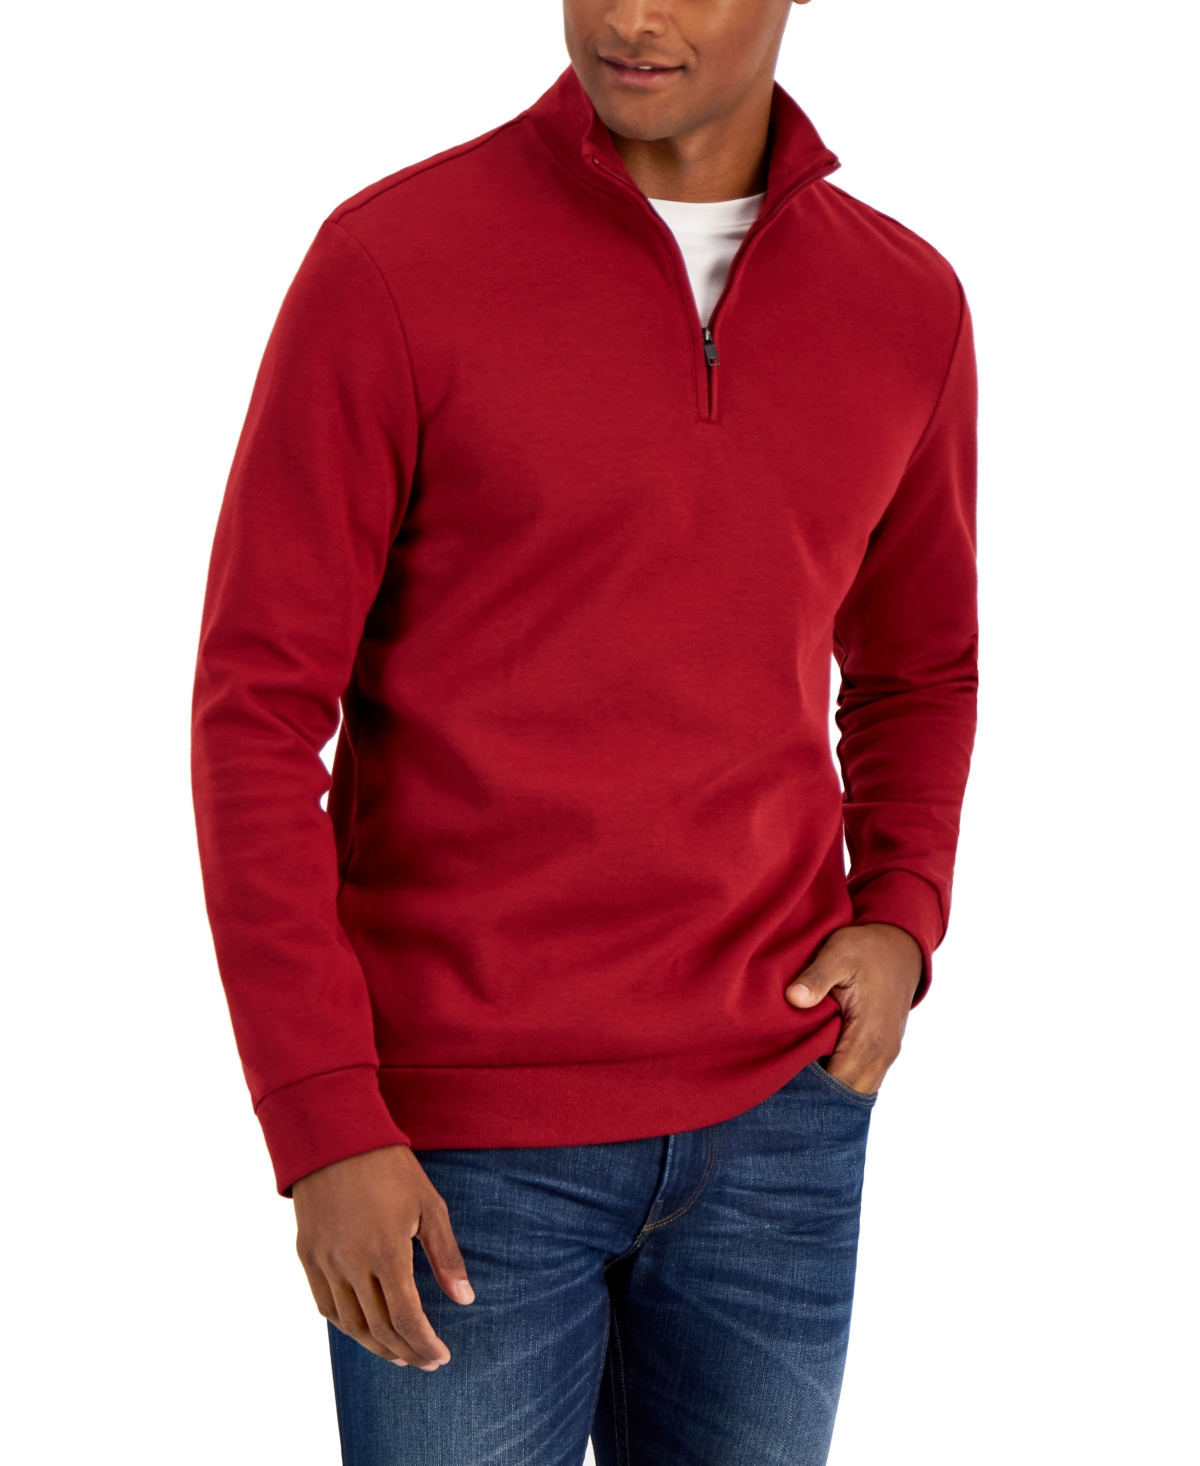 Alfani Men's Quarter-Zip Sweater, Created for Macy's